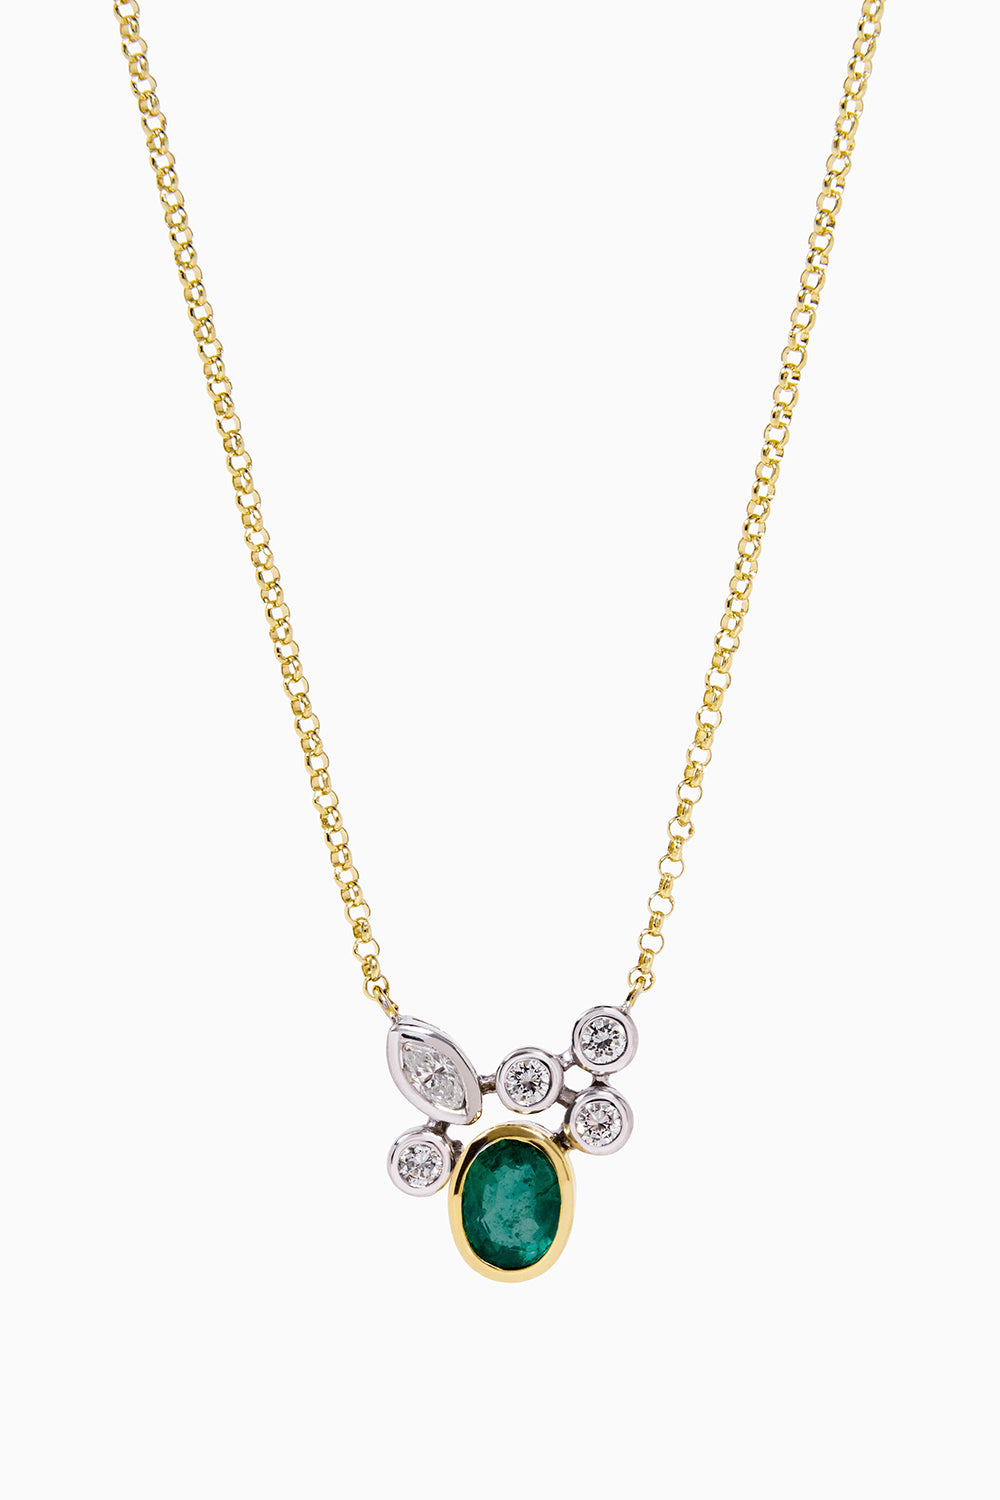 Oval emerald and diamonds pendant necklace